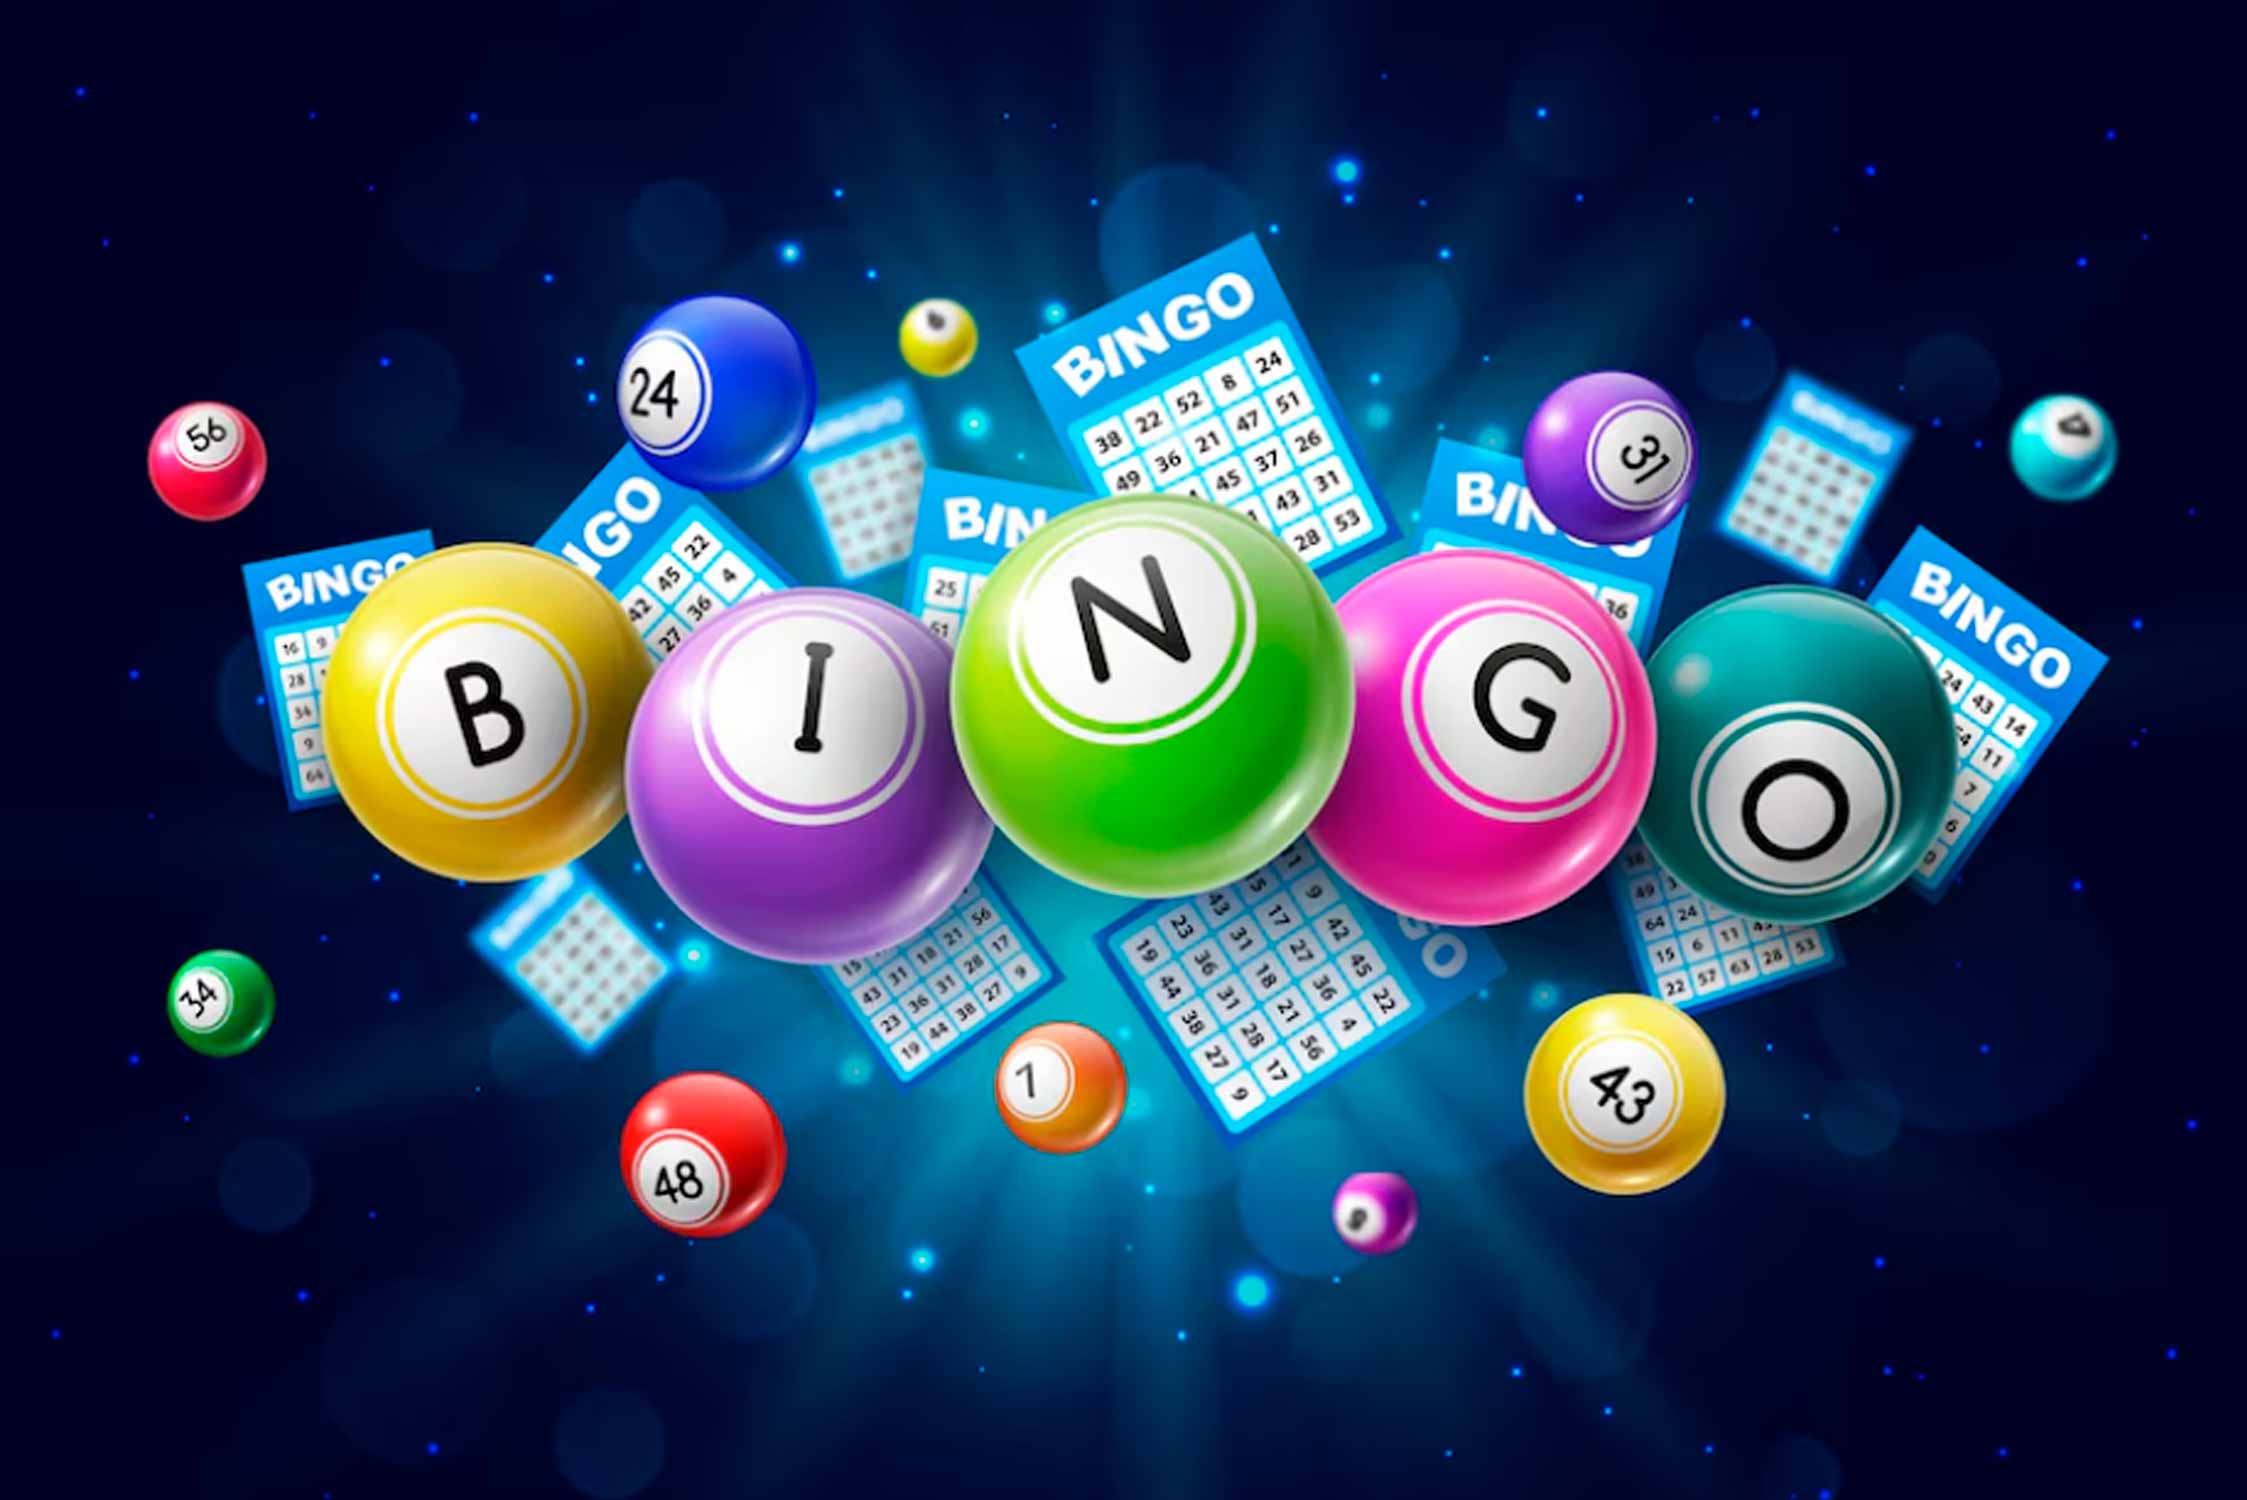 Bingo Online Gratis: Juégalo Sin Descargar, En Tu Celular